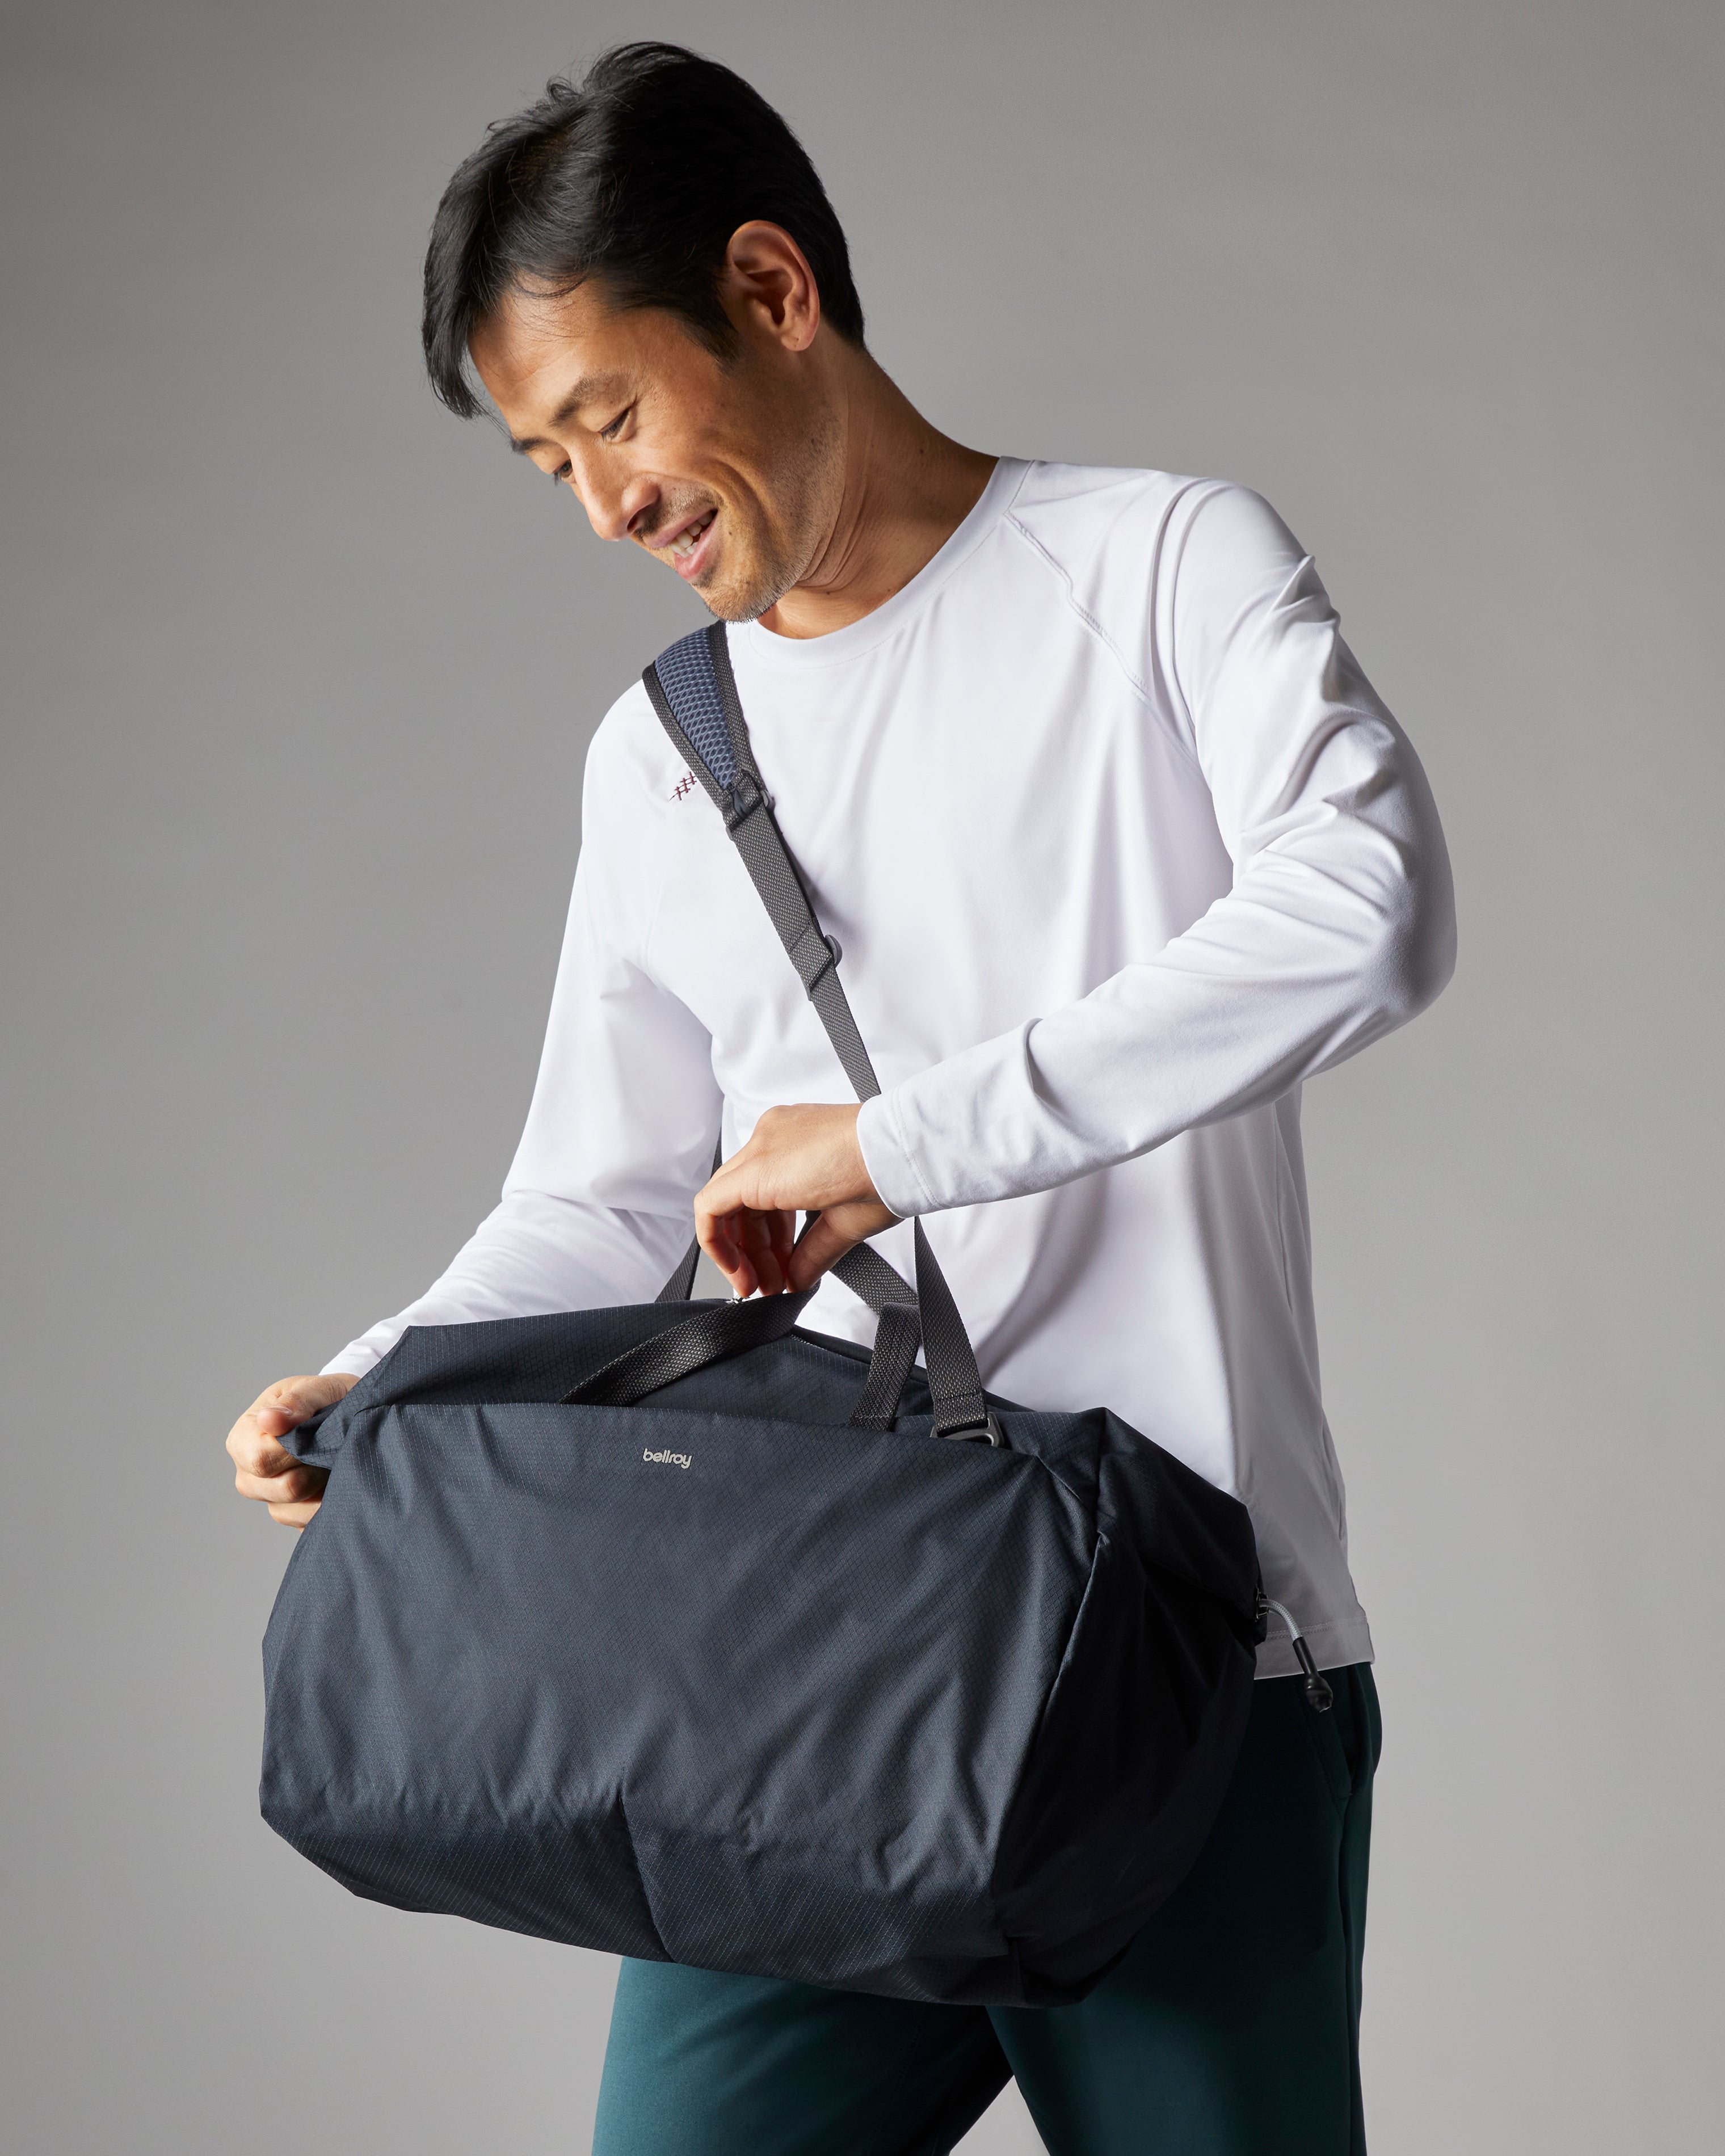 Bellroy SLR camera bag VentureSling10L Explorer chest bag for men and women  photography travel messenger bag - AliExpress